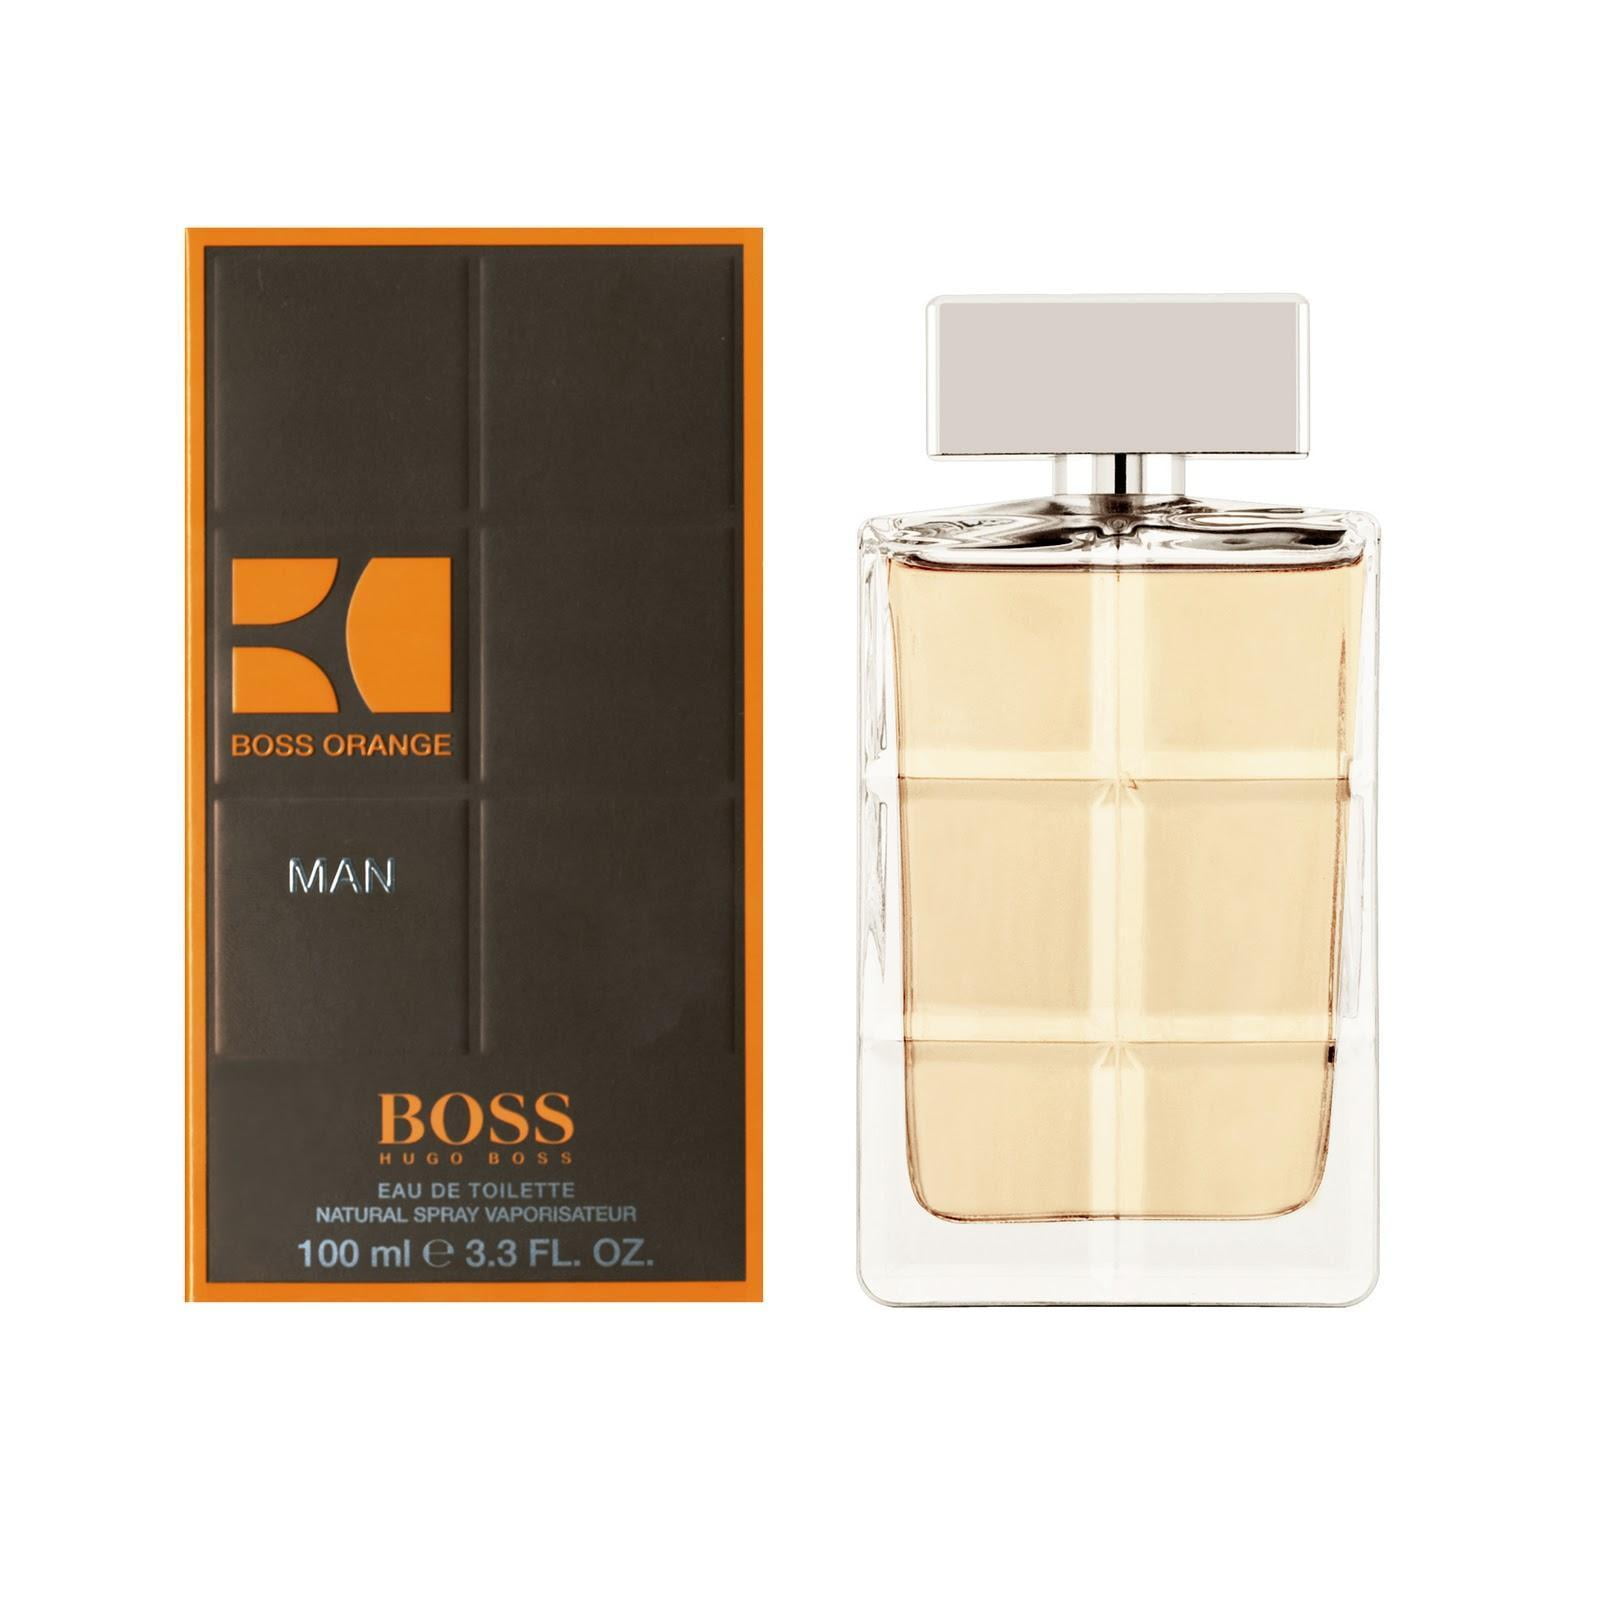 hugo boss orange perfume mens